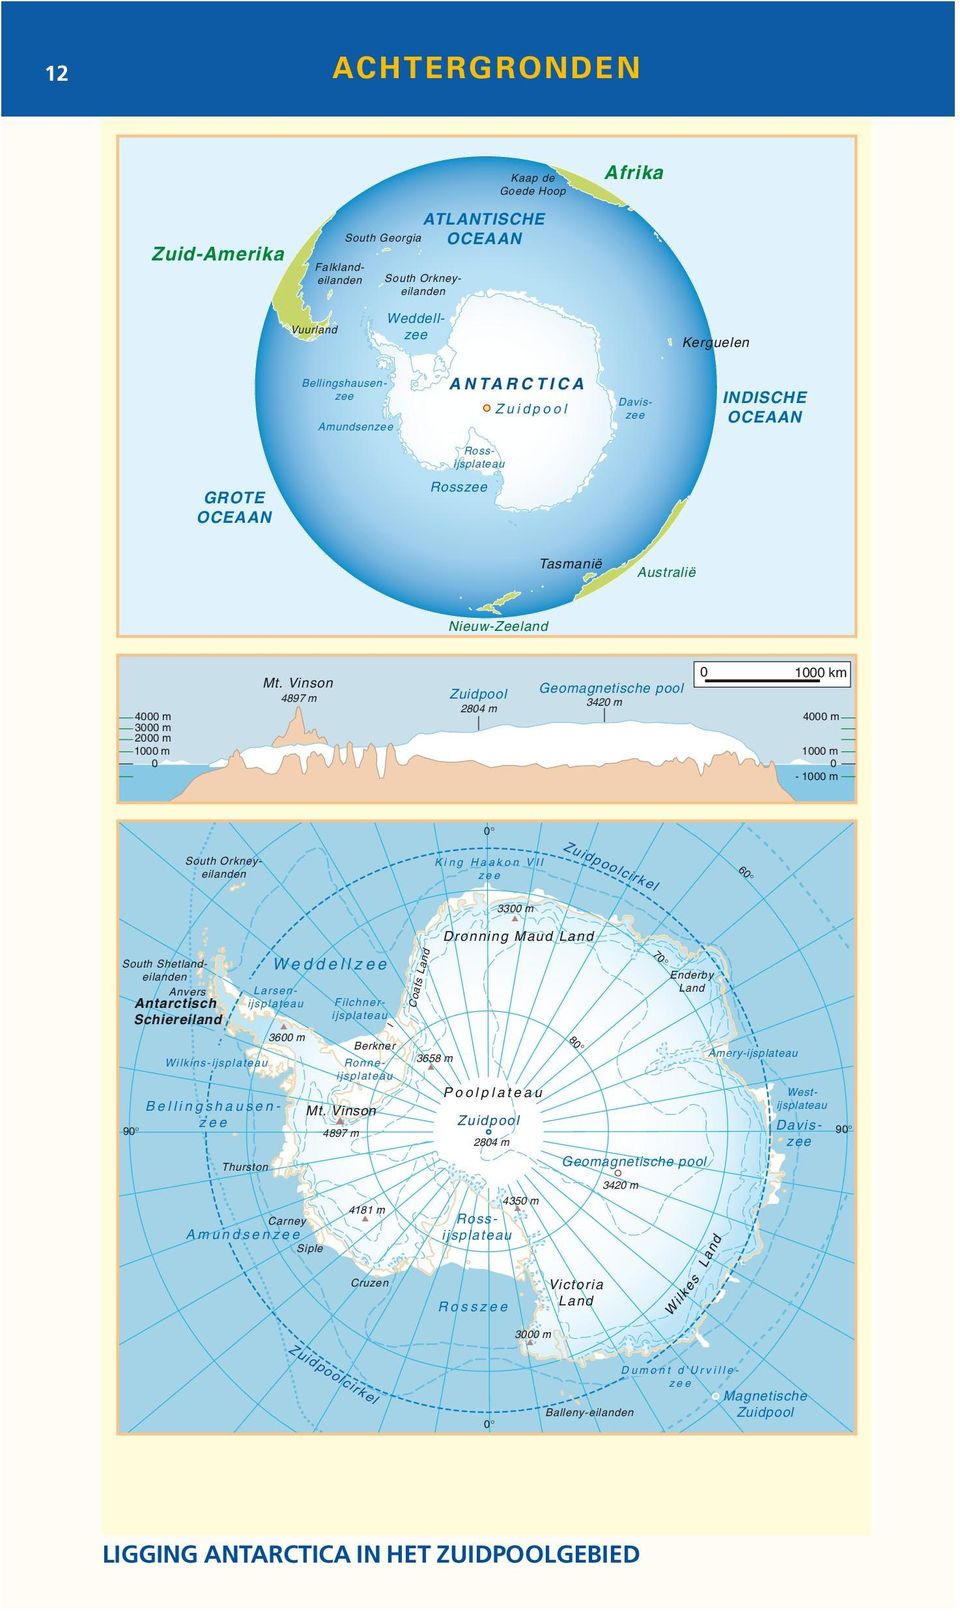 Vinson 4897 m Zuidpool 2804 m Geomagnetische pool 3420 m 0 1000 km 4000 m 1000 m 0-1000 m 0 Zuidpoolcirkel South Orkneyeilanden K i n g H a a k o n V I I z e e 60 Anvers Antarctisch Schiereiland